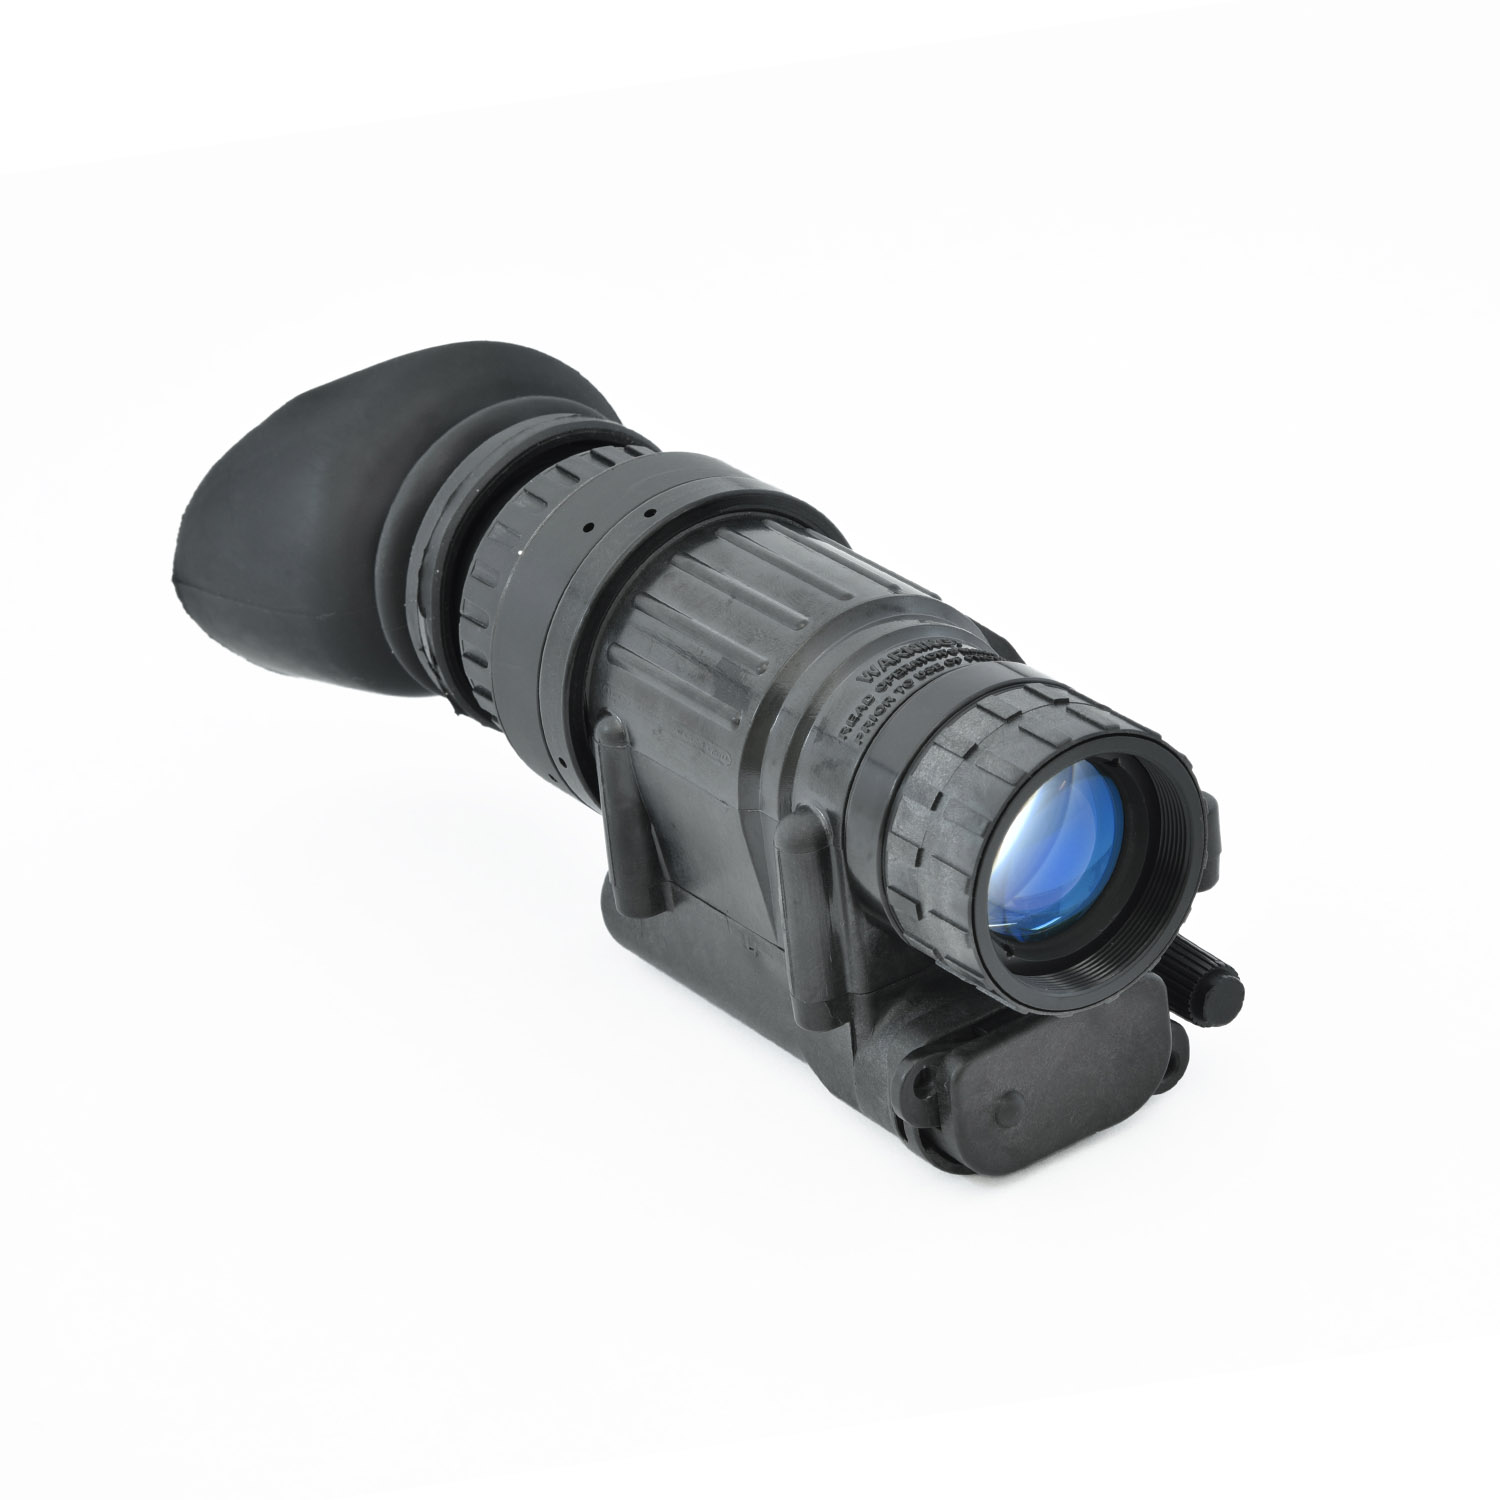 PVS-14 Night Vision Monocular - Night Vision Devices